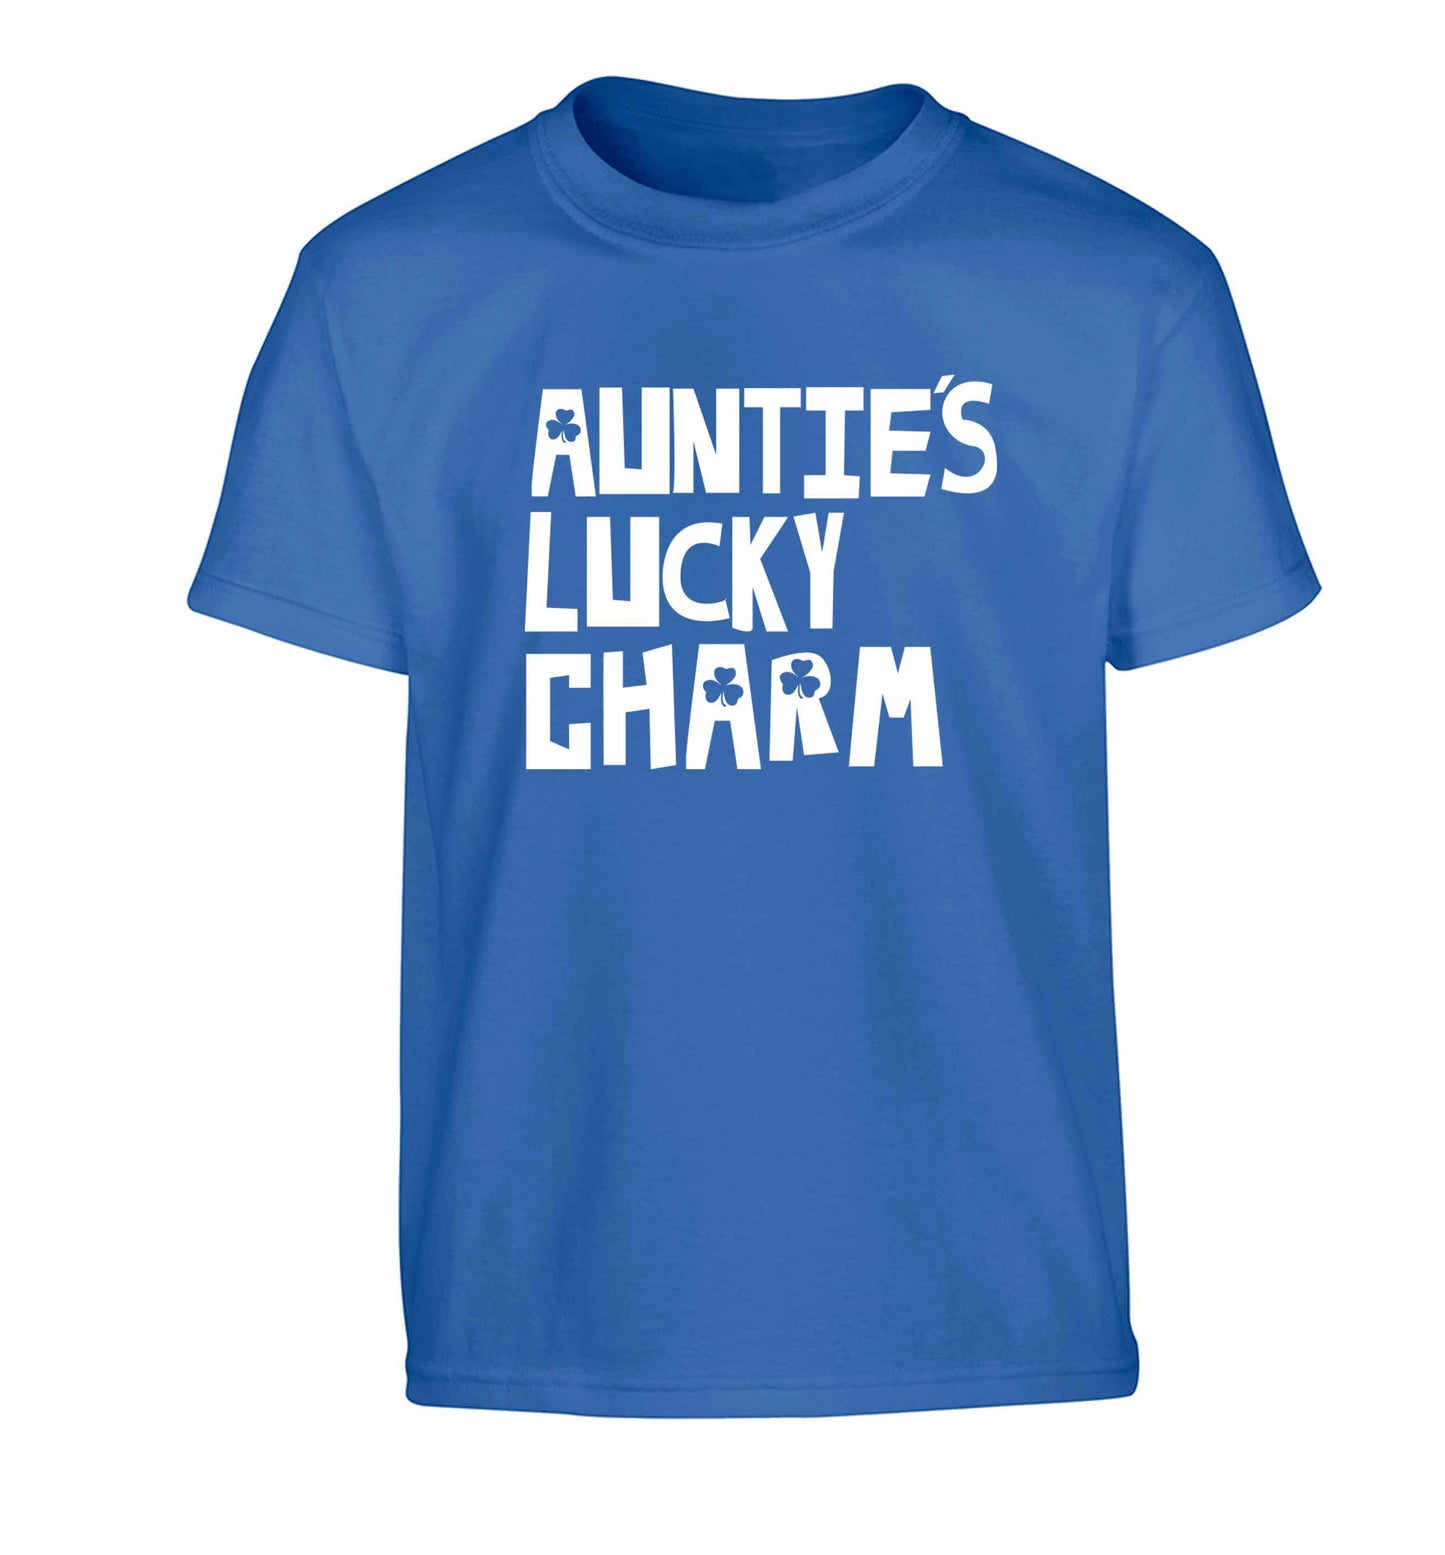 Auntie's lucky charm Children's blue Tshirt 12-13 Years